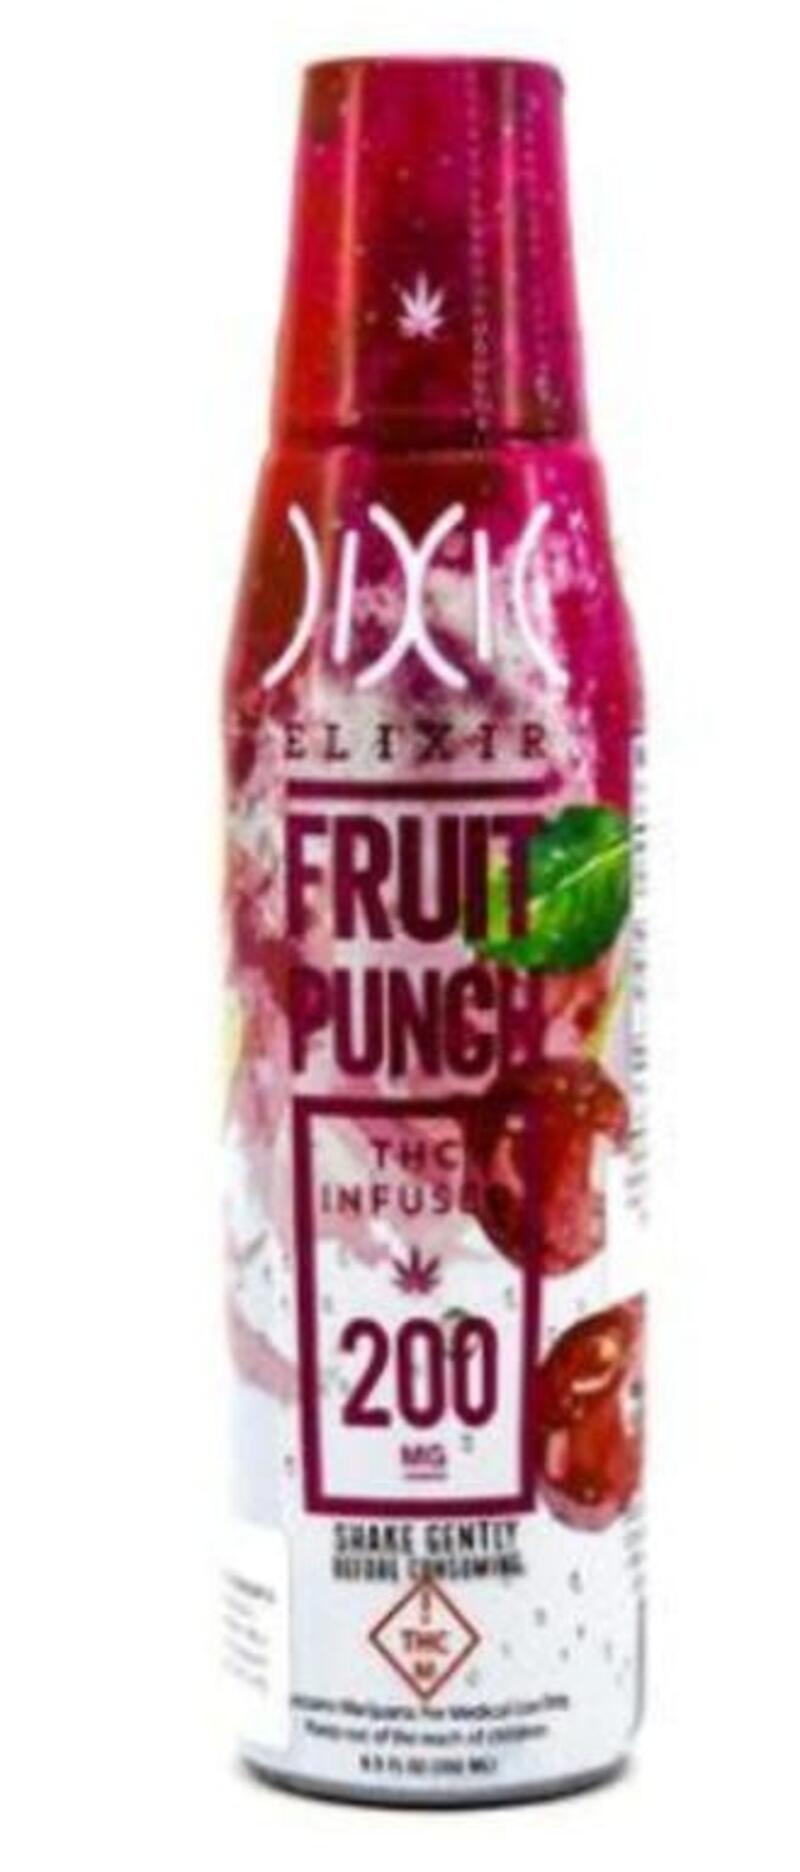 Dixie Elixir 200mg Fruit Punch